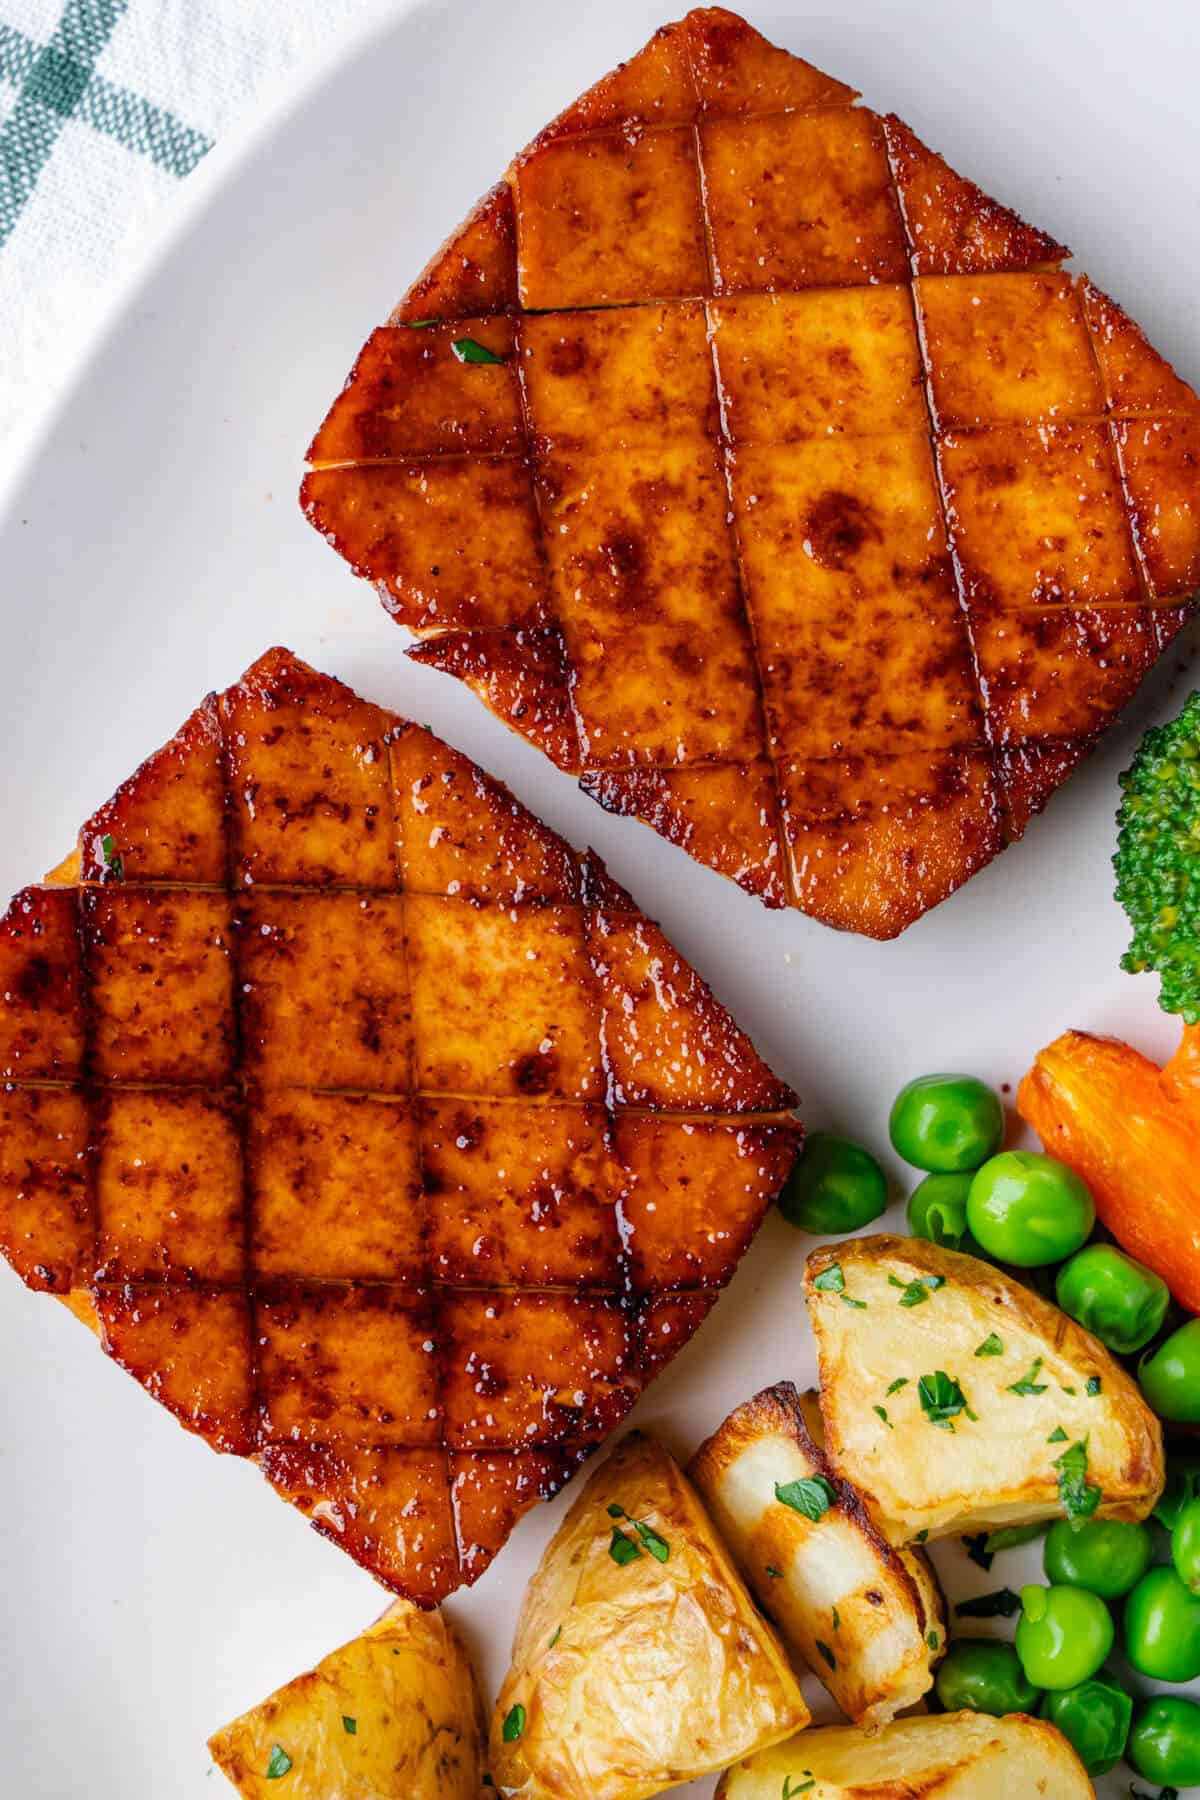 Tofu steak served with vegetables